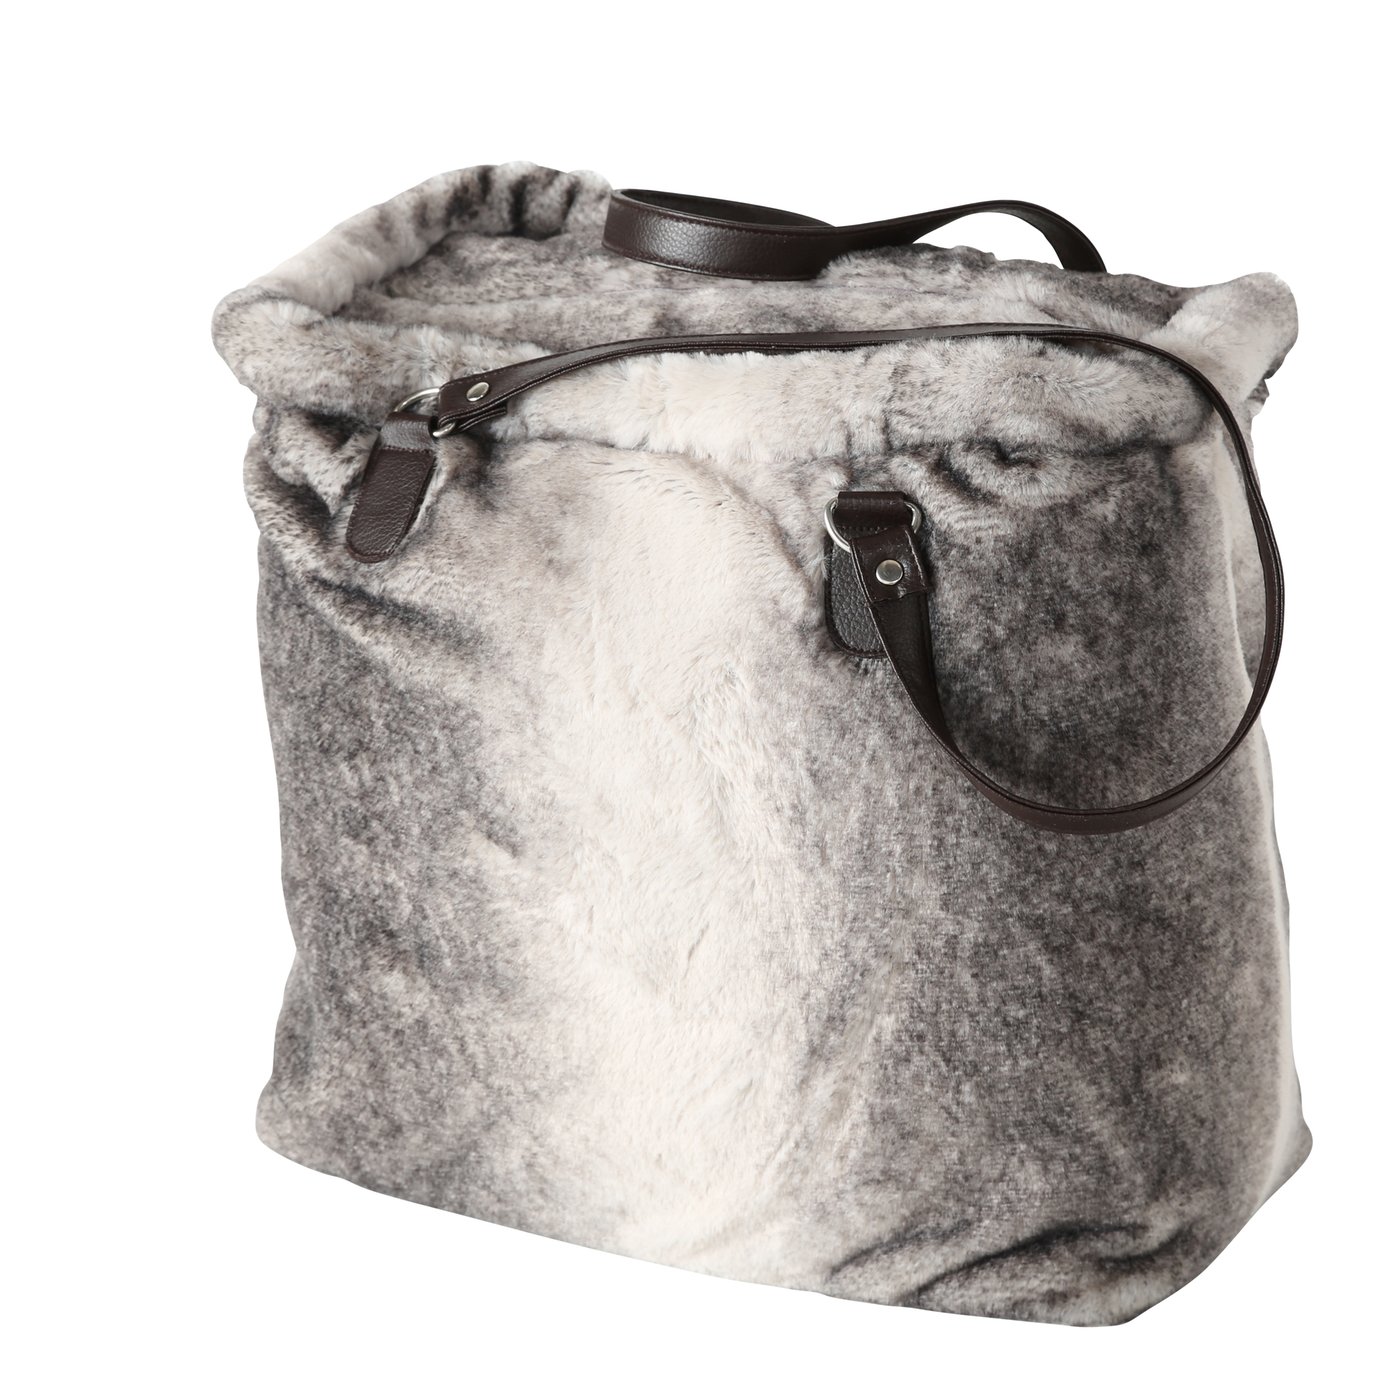 Fell Handtasche Shopper Shoppingtasche Hase grau beige, Tasche aus künstlichen Kaninchenfell, 1008949, 4020607554122, Boltze